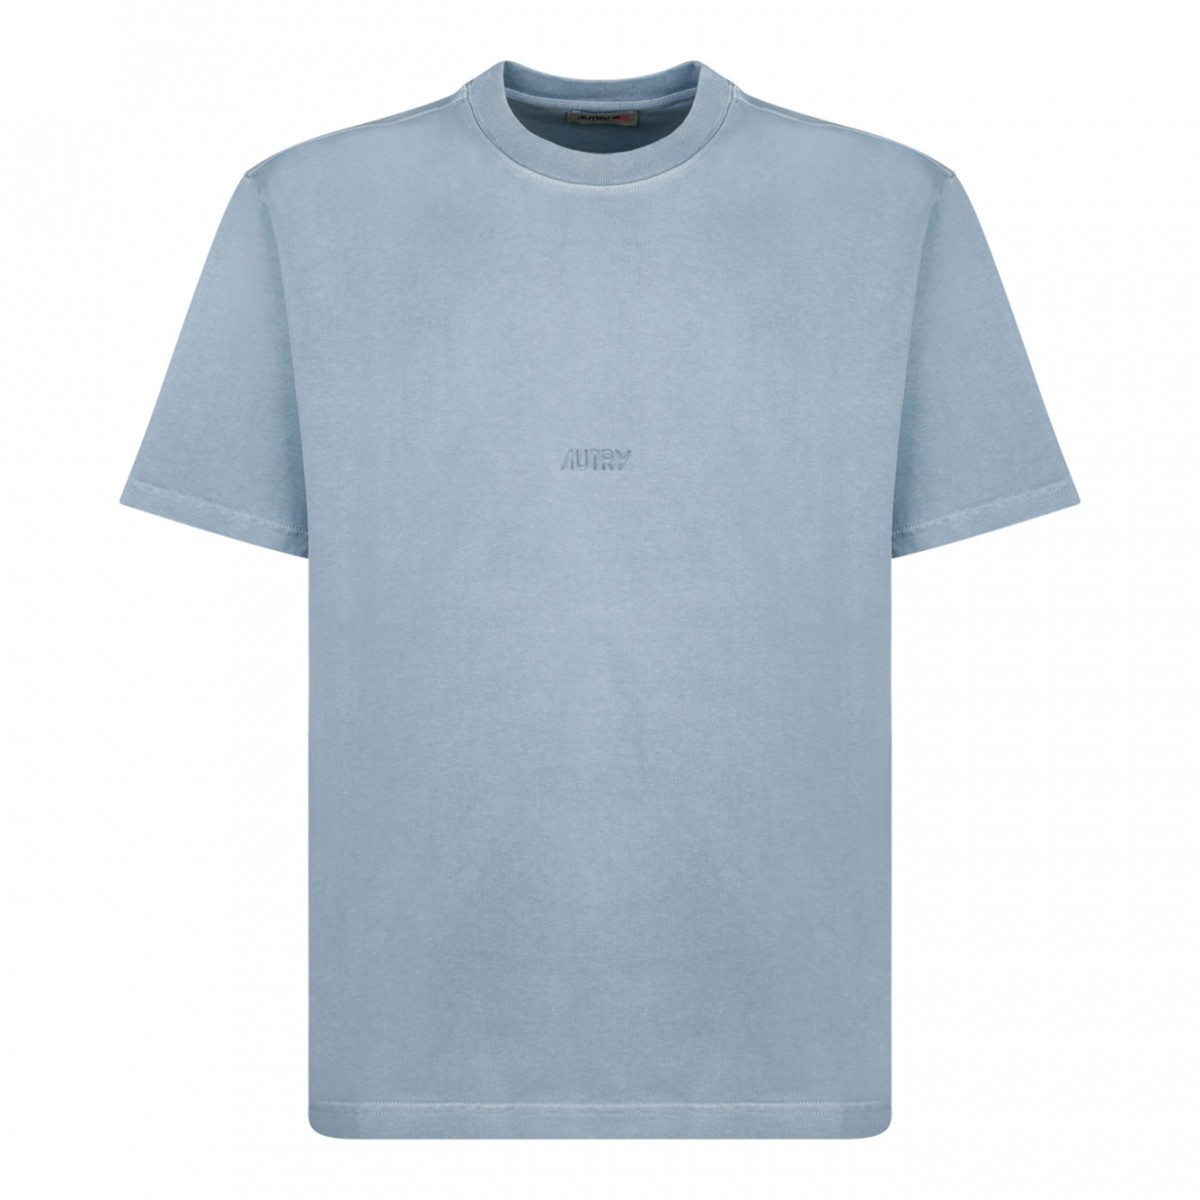 Illusion Blue Crew-Neck T-shirt